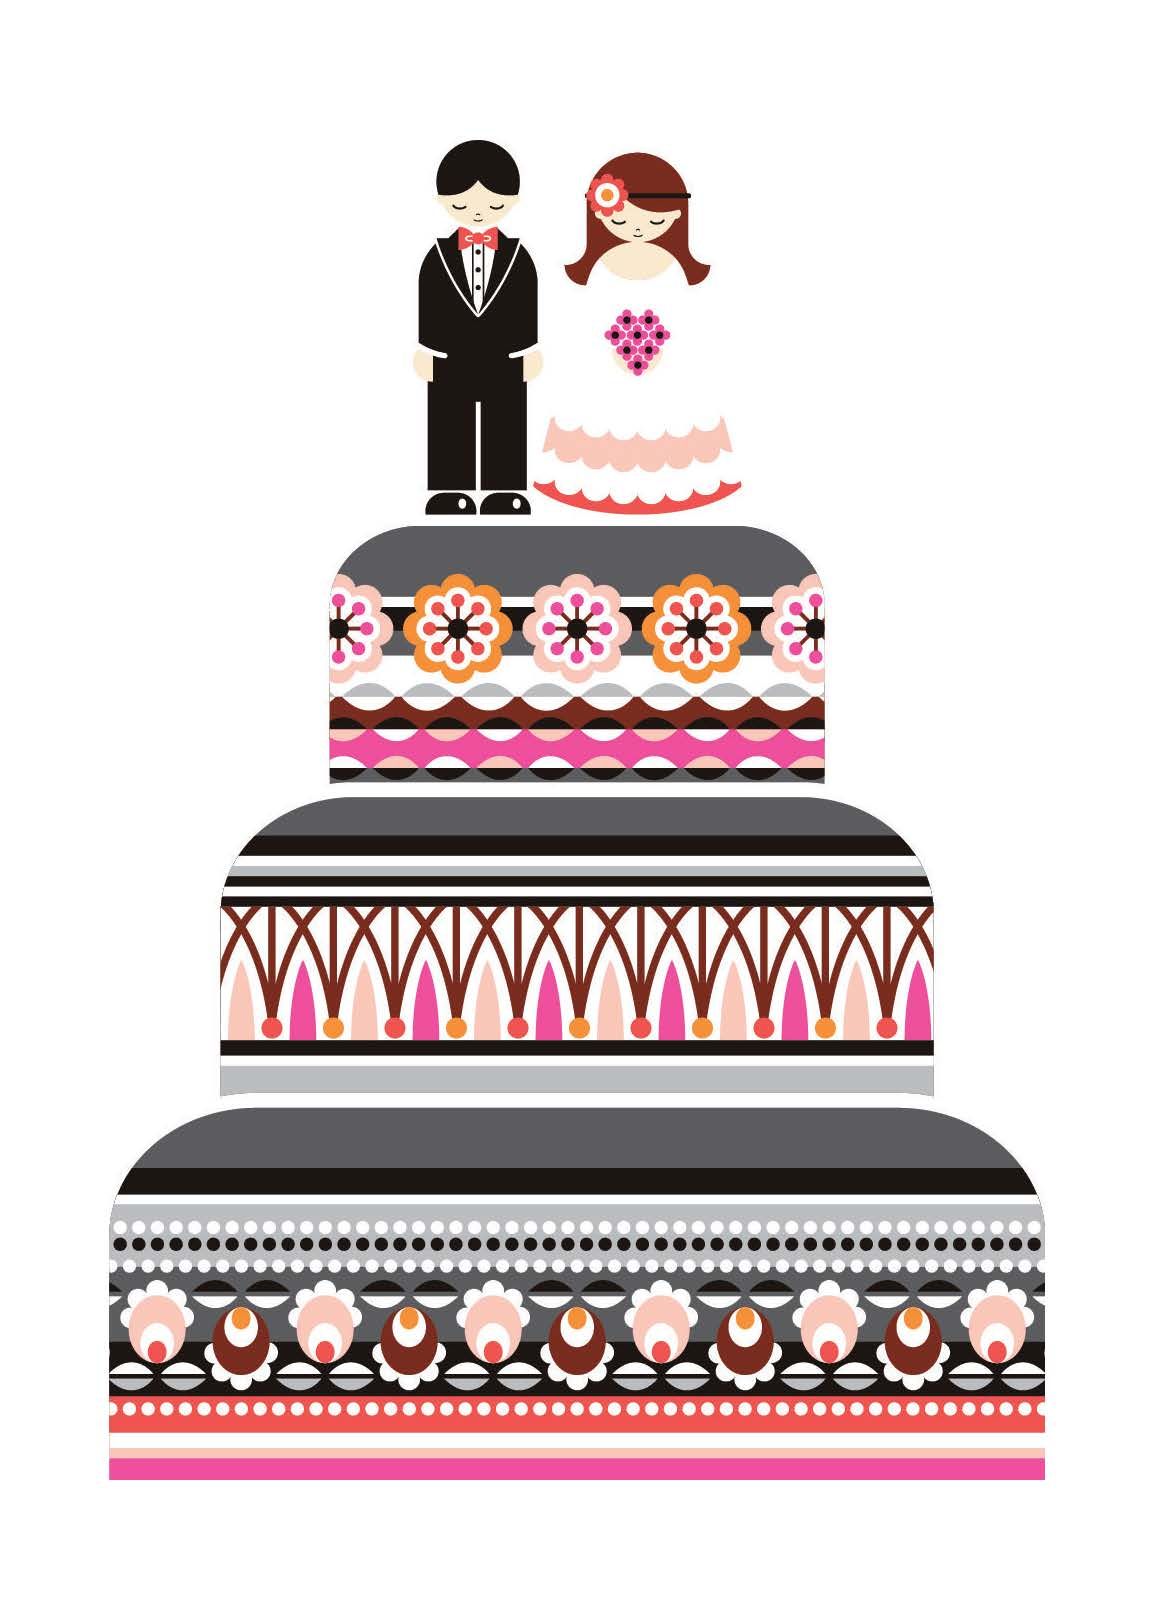 NUOVO - "FOLK WEDDING" WEDDING GREETING CARD